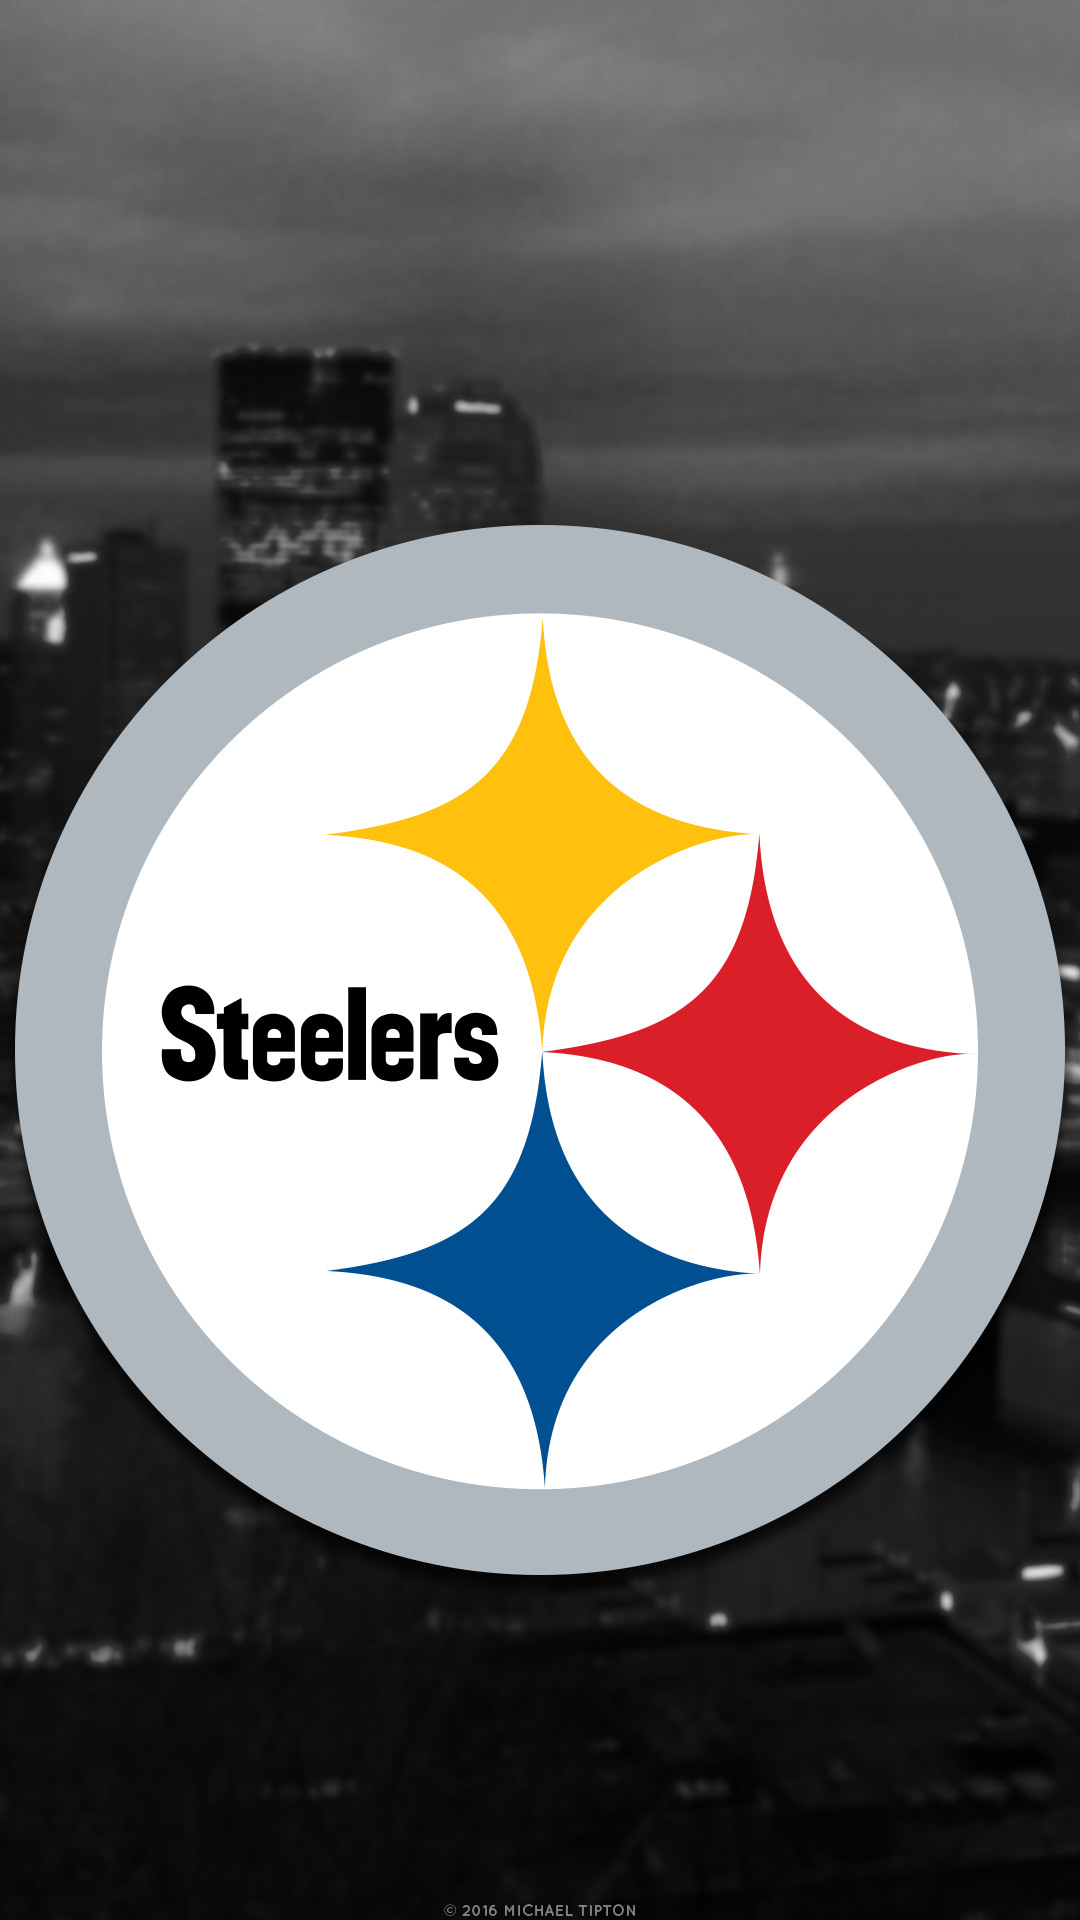 Steelers Wallpaper Image